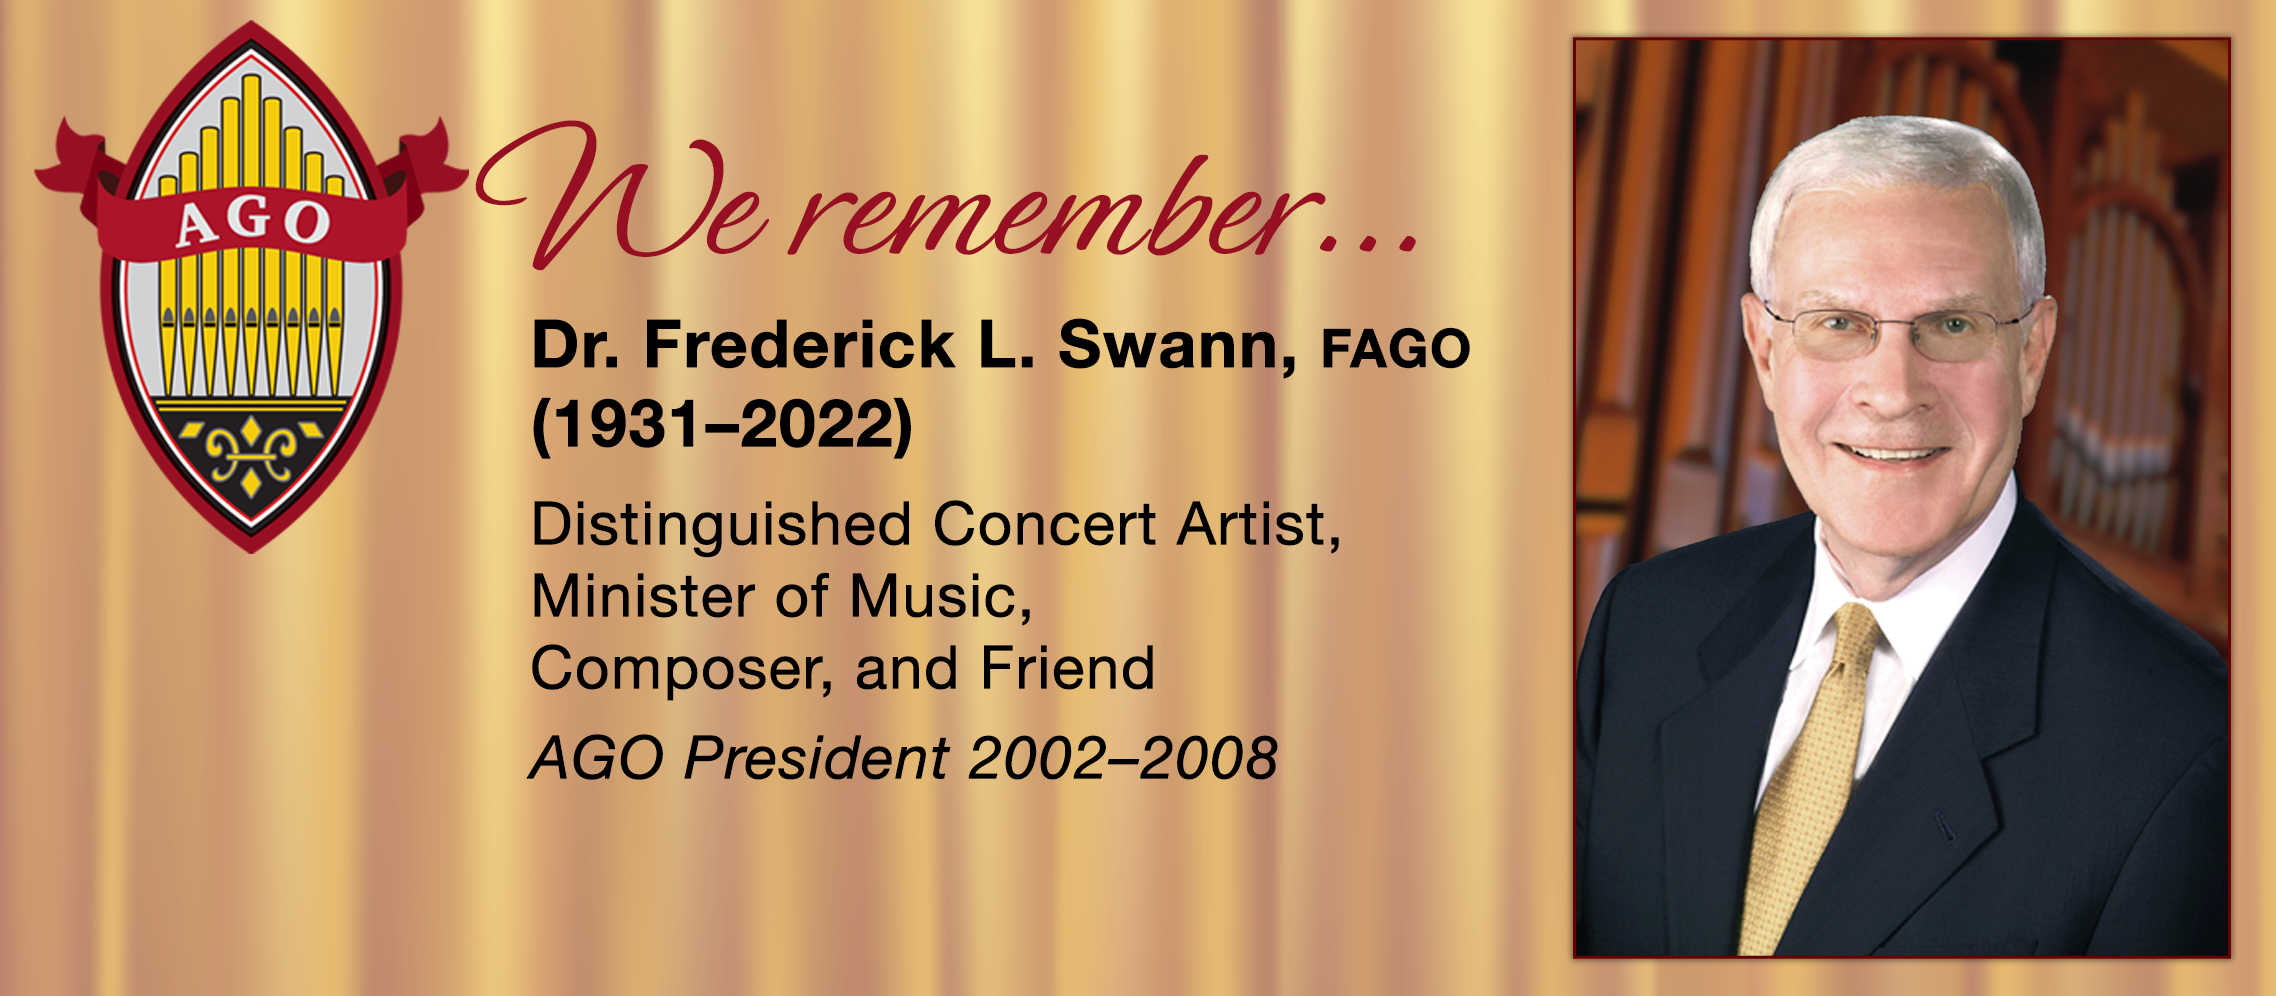 We Remember Dr. Frederick L. Swann, FAGO (1931-2022)